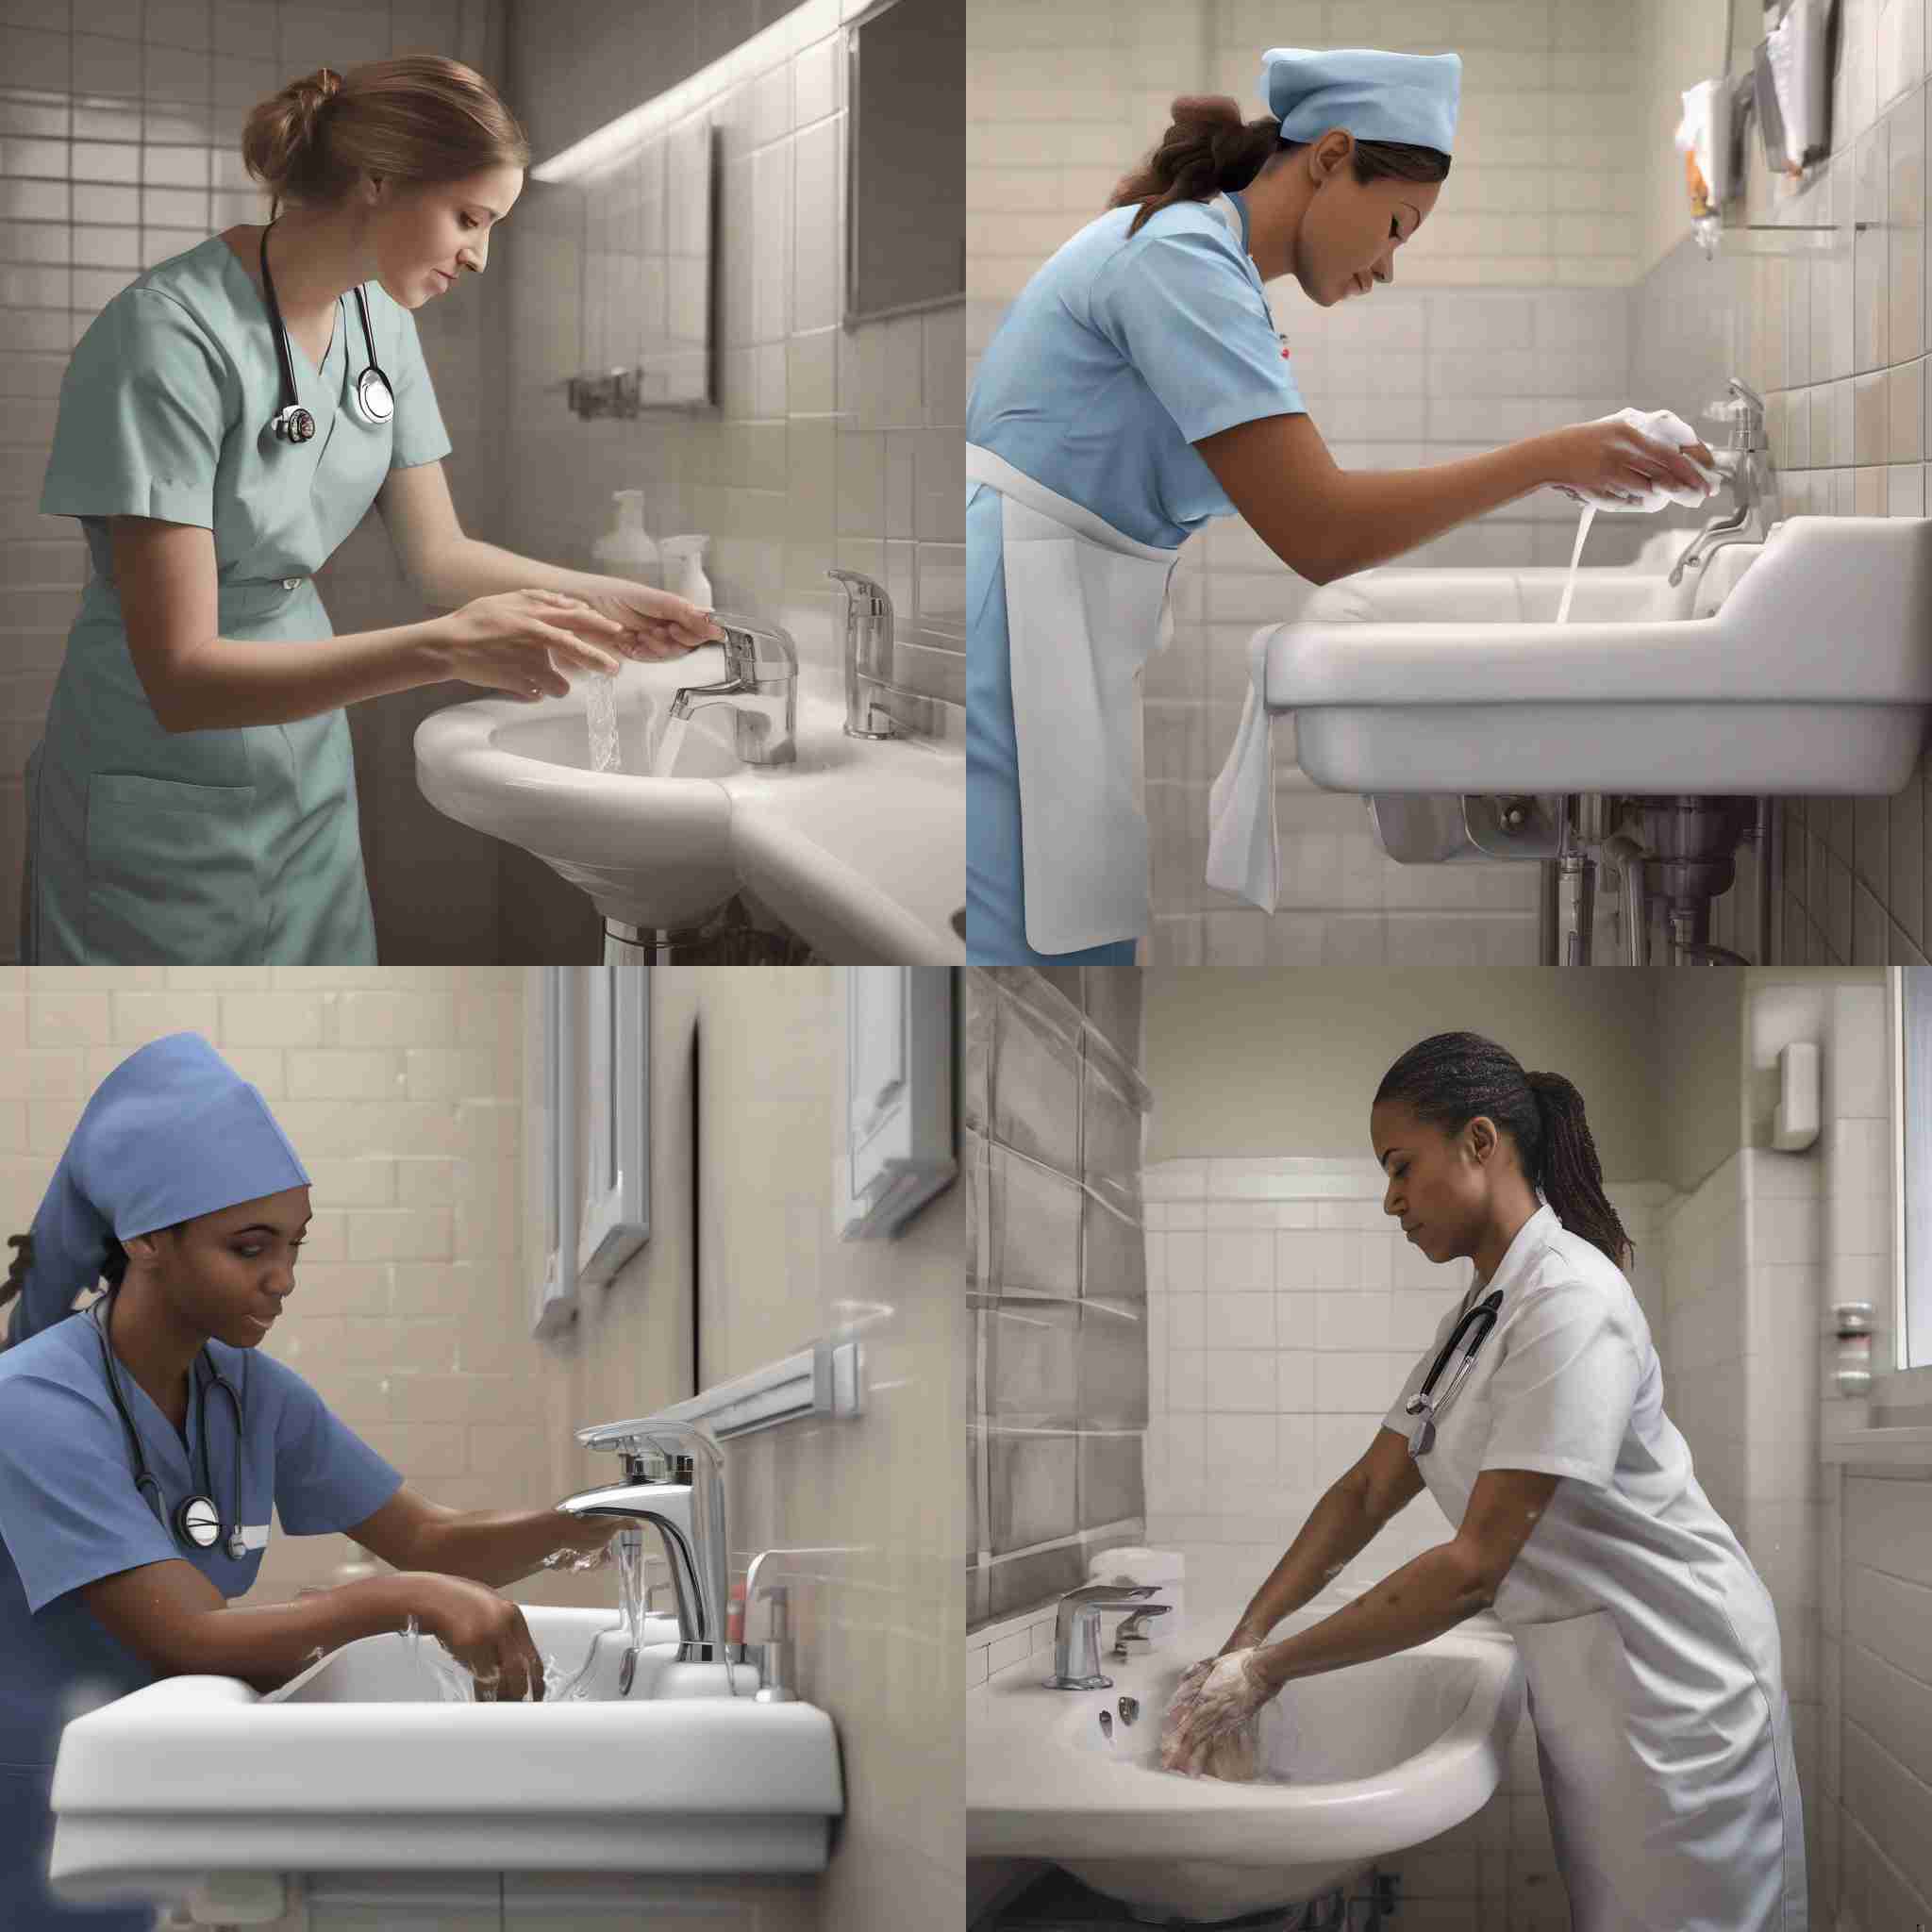 A nurse washing hands